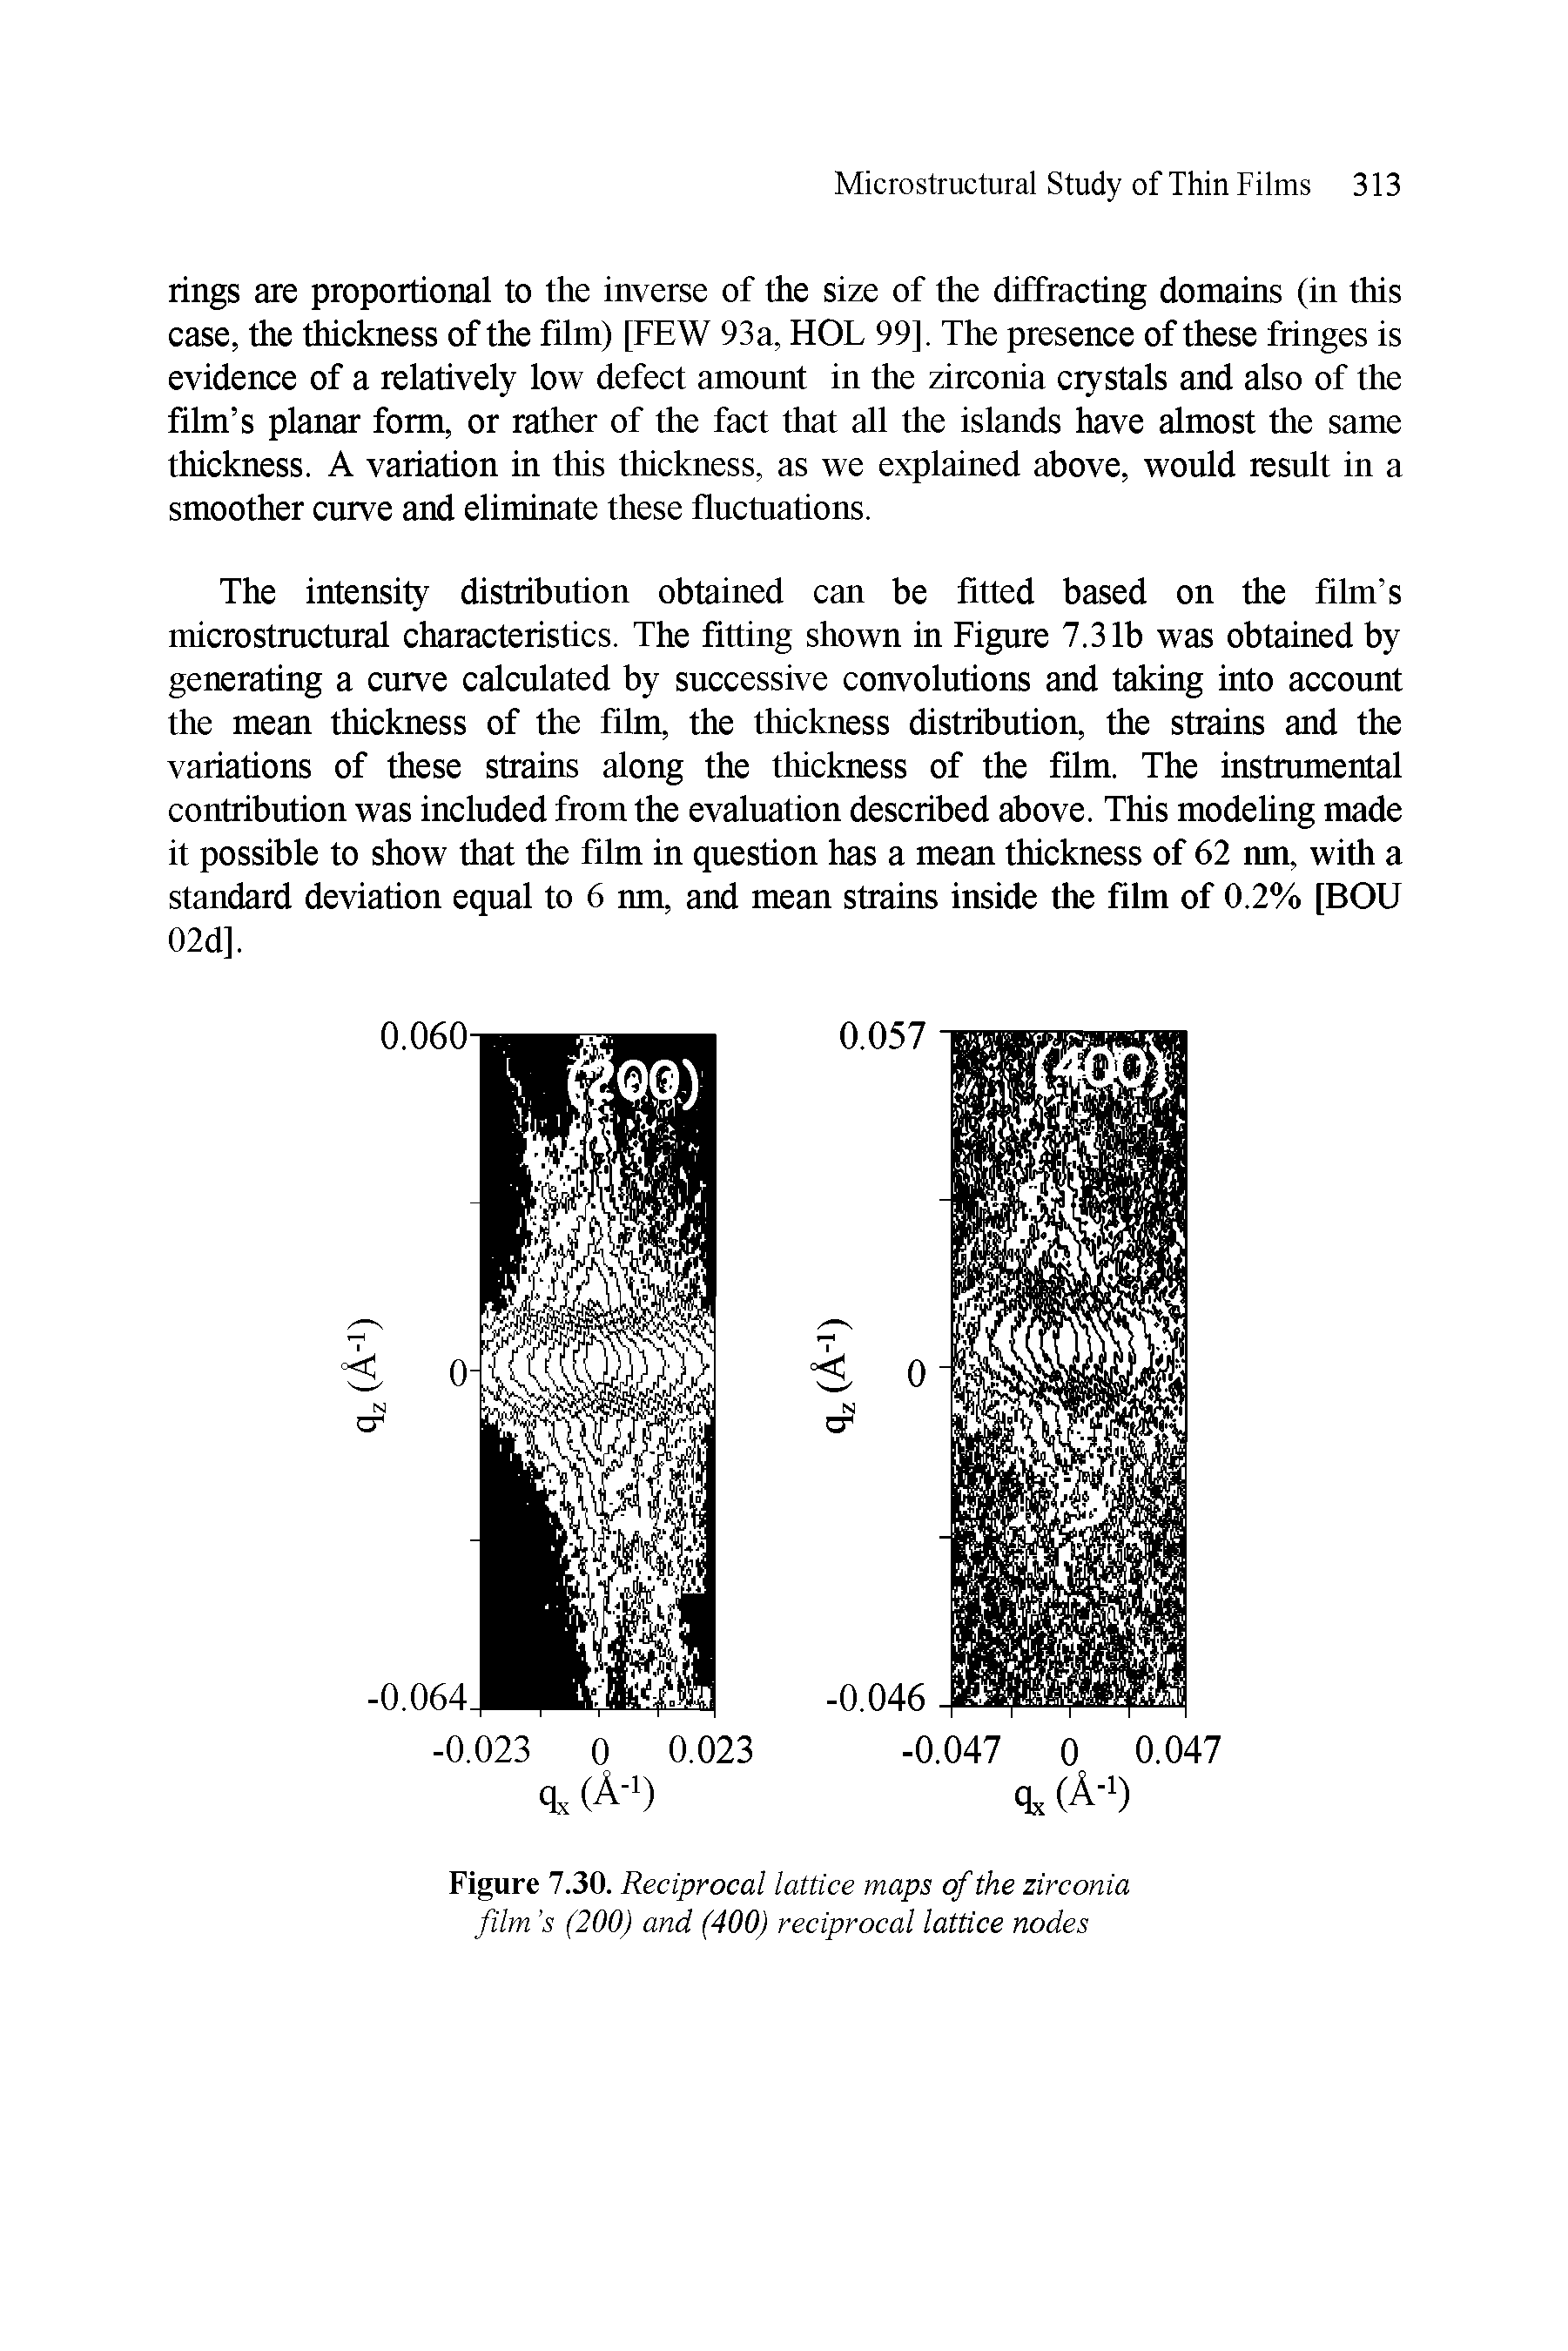 Figure 7.30. Reciprocal lattice maps of the zirconia film s (200) and (400) reciprocal lattice nodes...